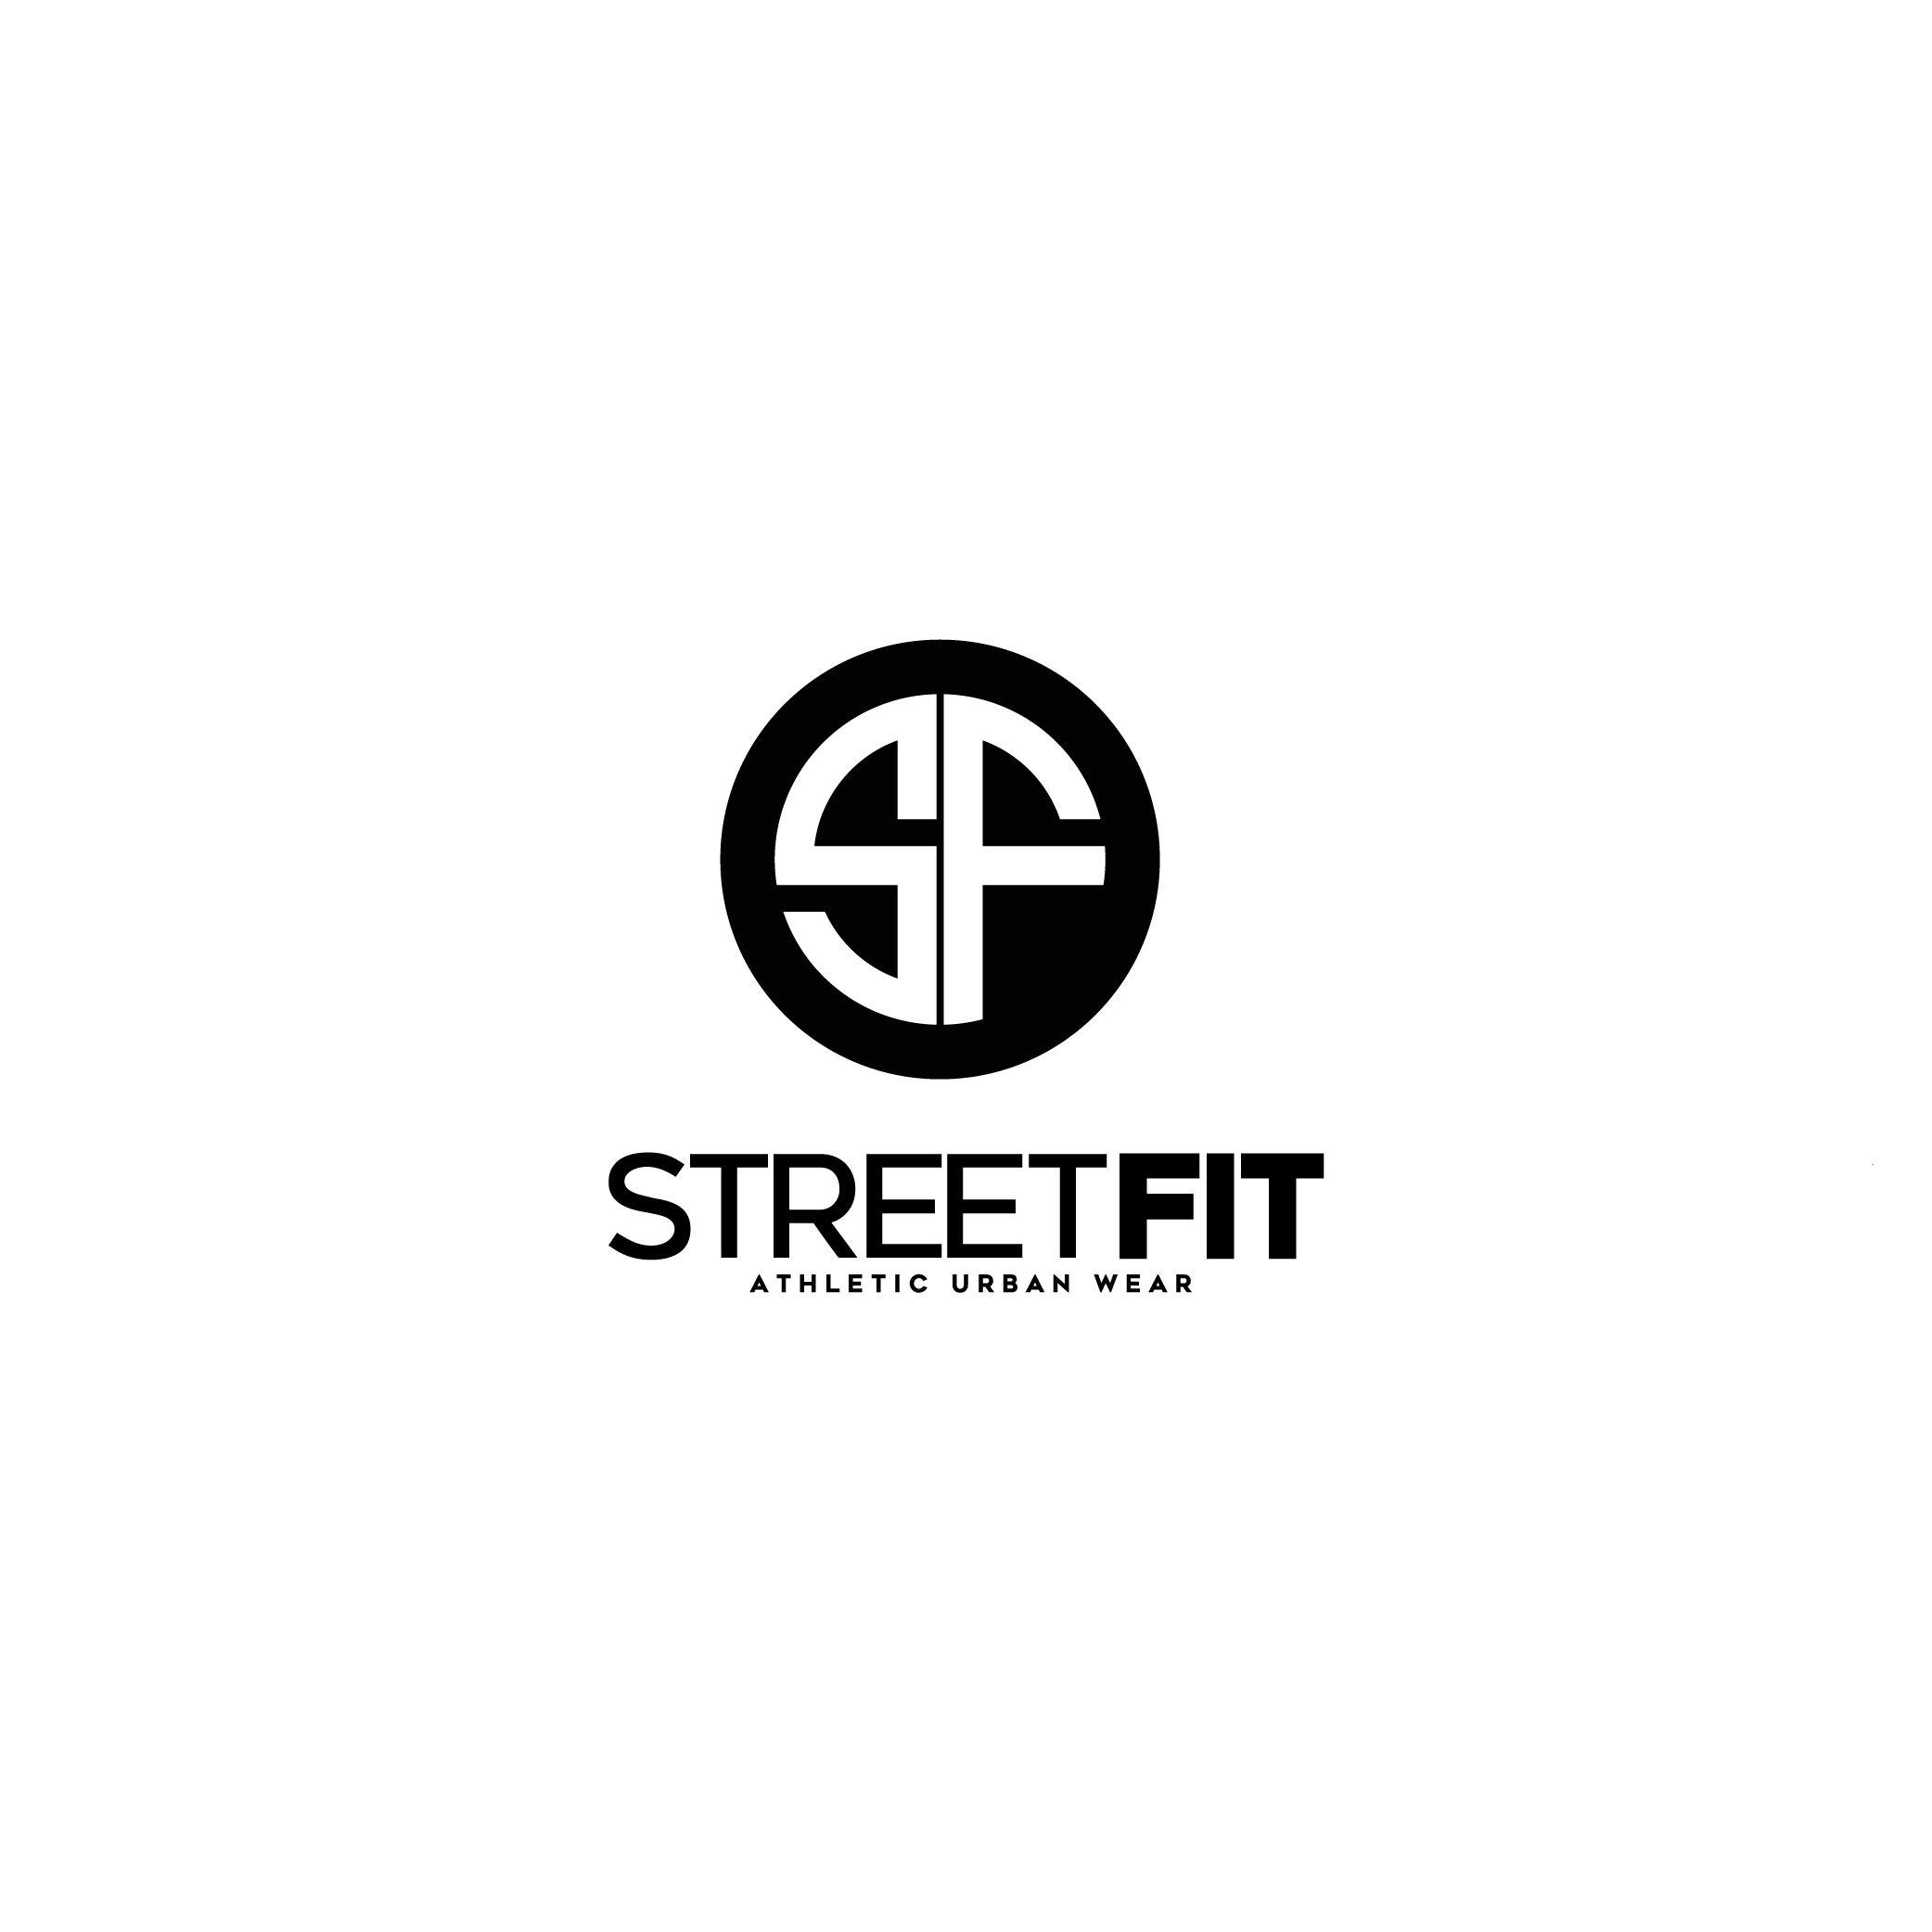 Street Clothing Logo - STREET FIT CLOTHING BRAND LOGO DESIGN – High Quality Graphic Design ...